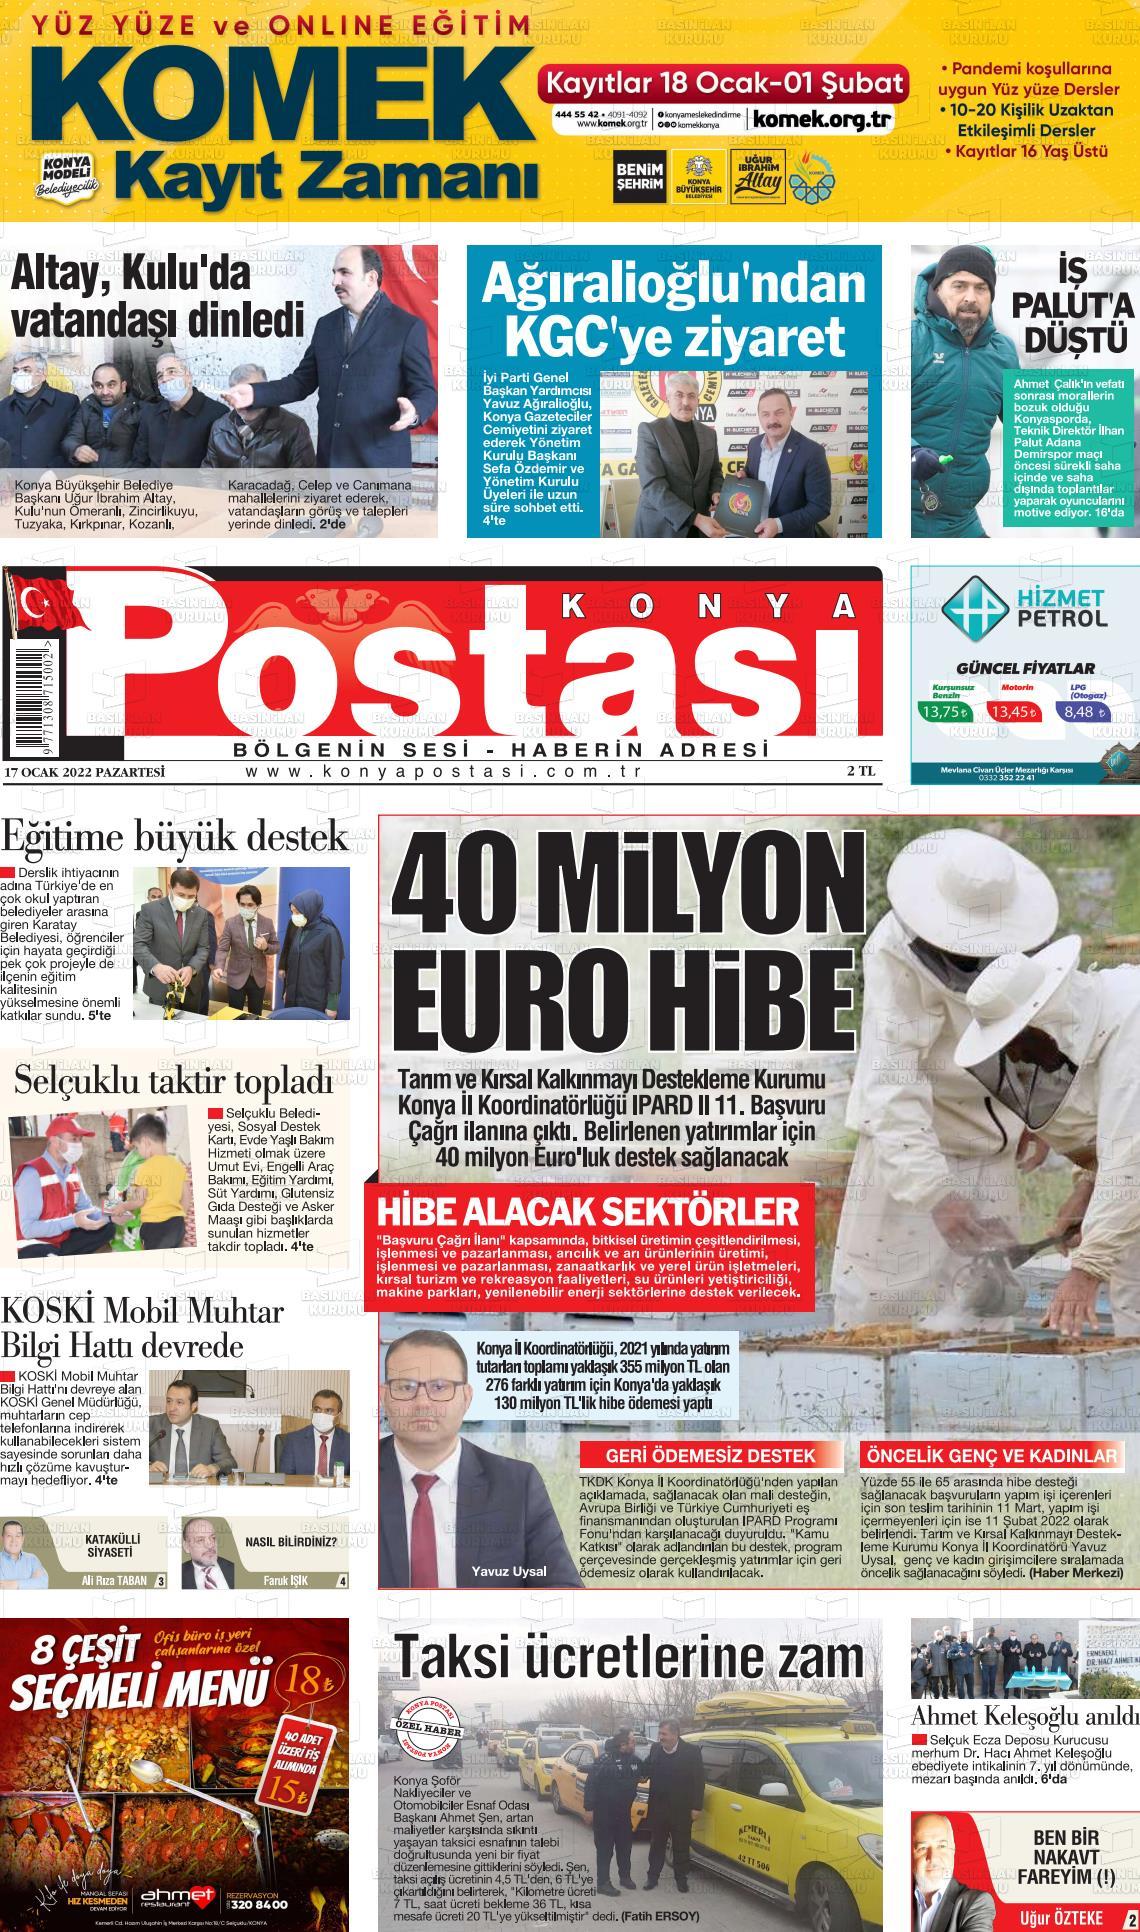 17 Ocak 2022 Konya Postası Gazete Manşeti